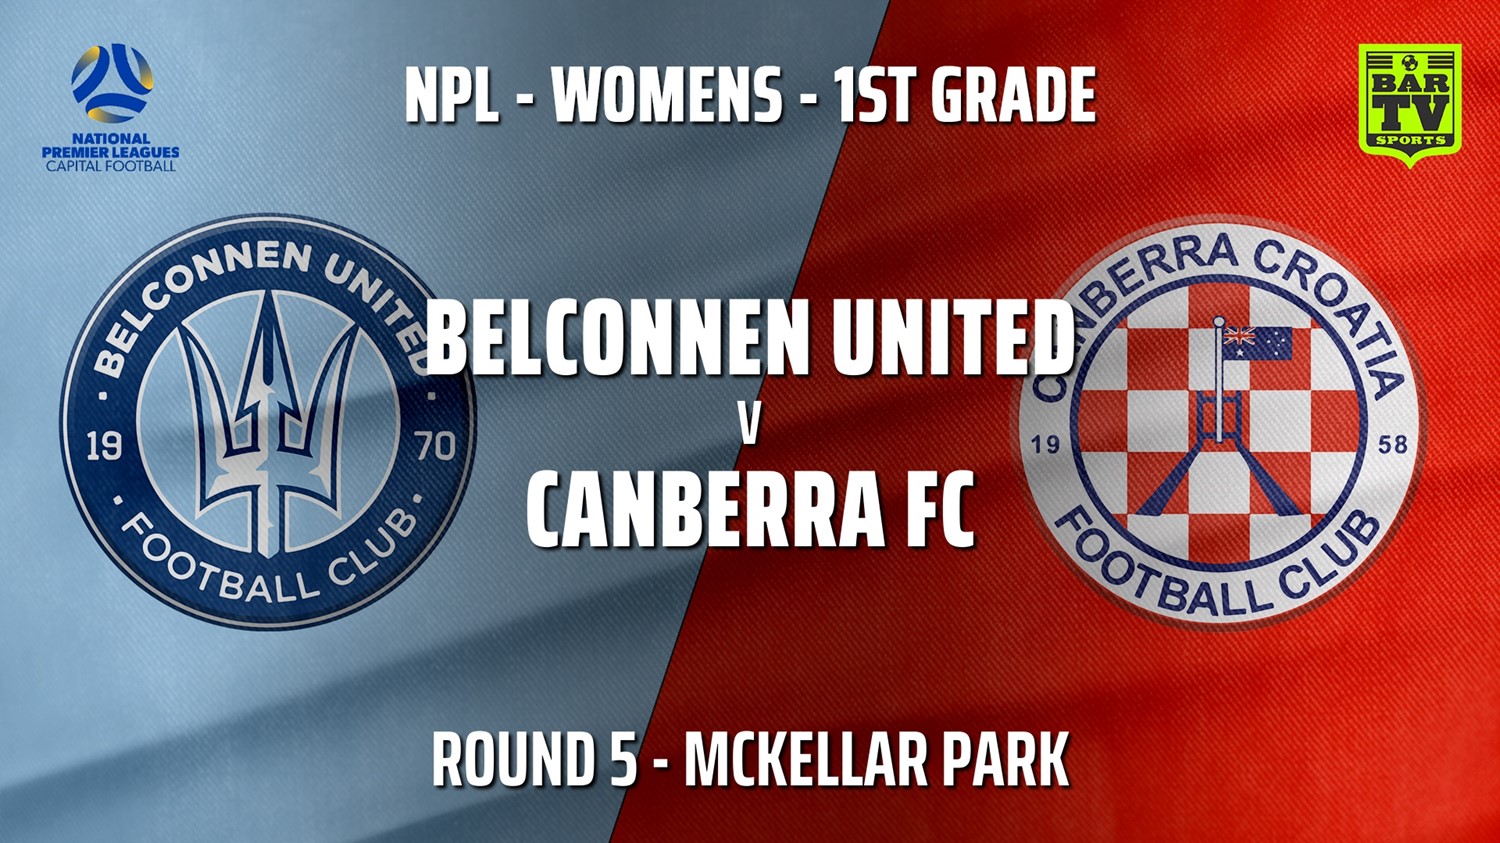 210509-NPLW - Capital Round 5 - Belconnen United (women) v Canberra FC (women) Slate Image